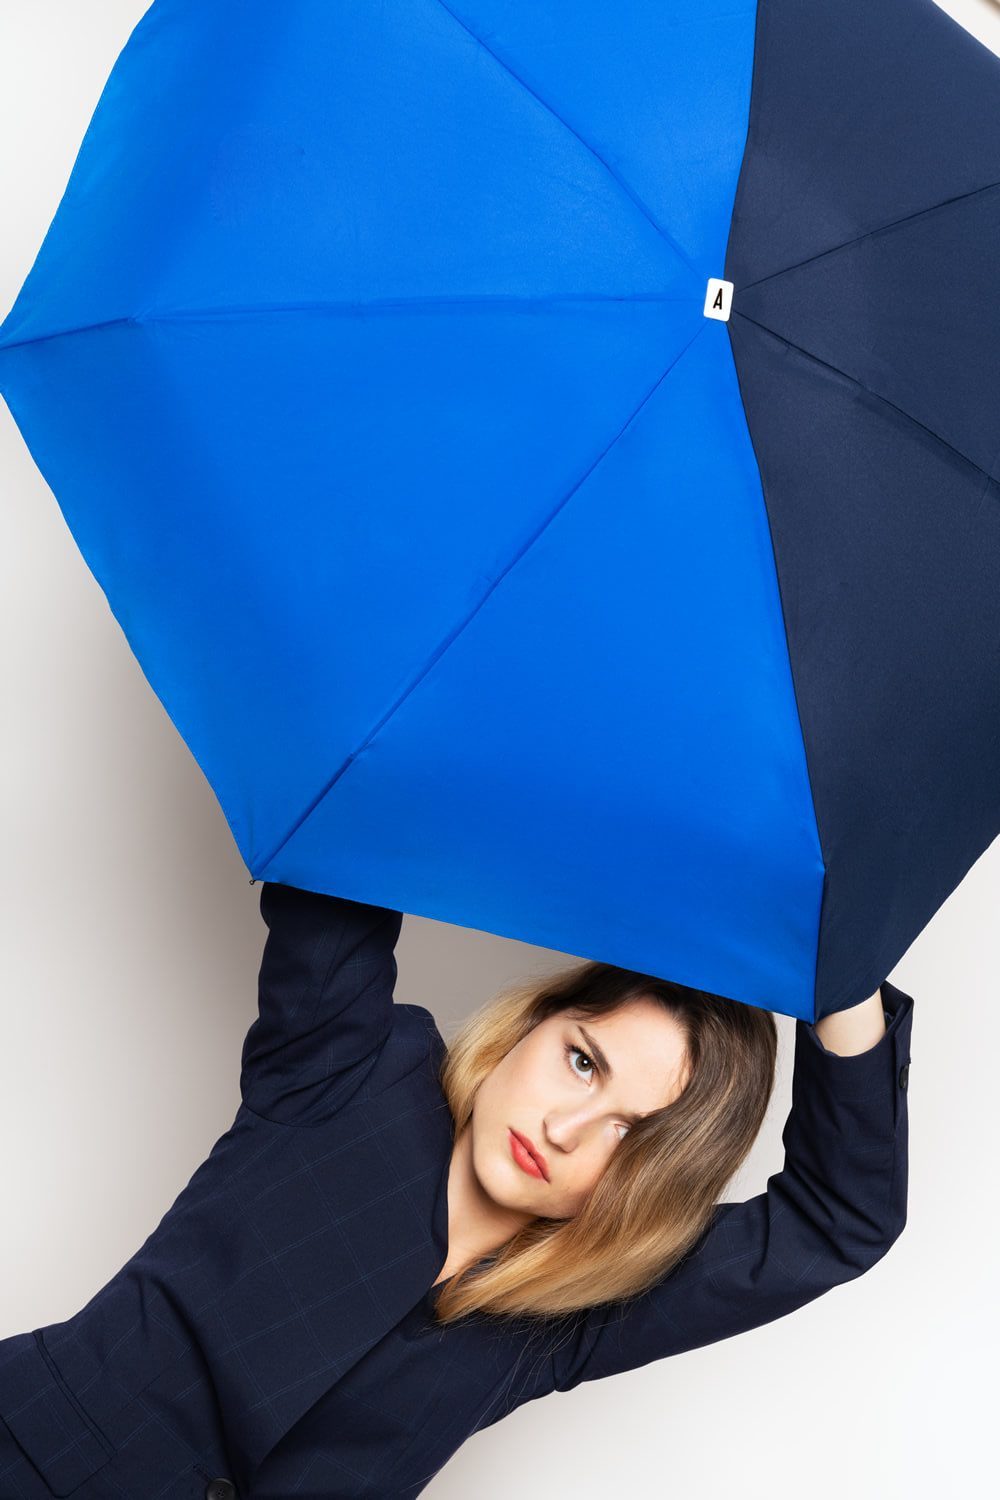 Anatole Paris Regenschirm Regenschirm Bicolor - königsblau und marineblau